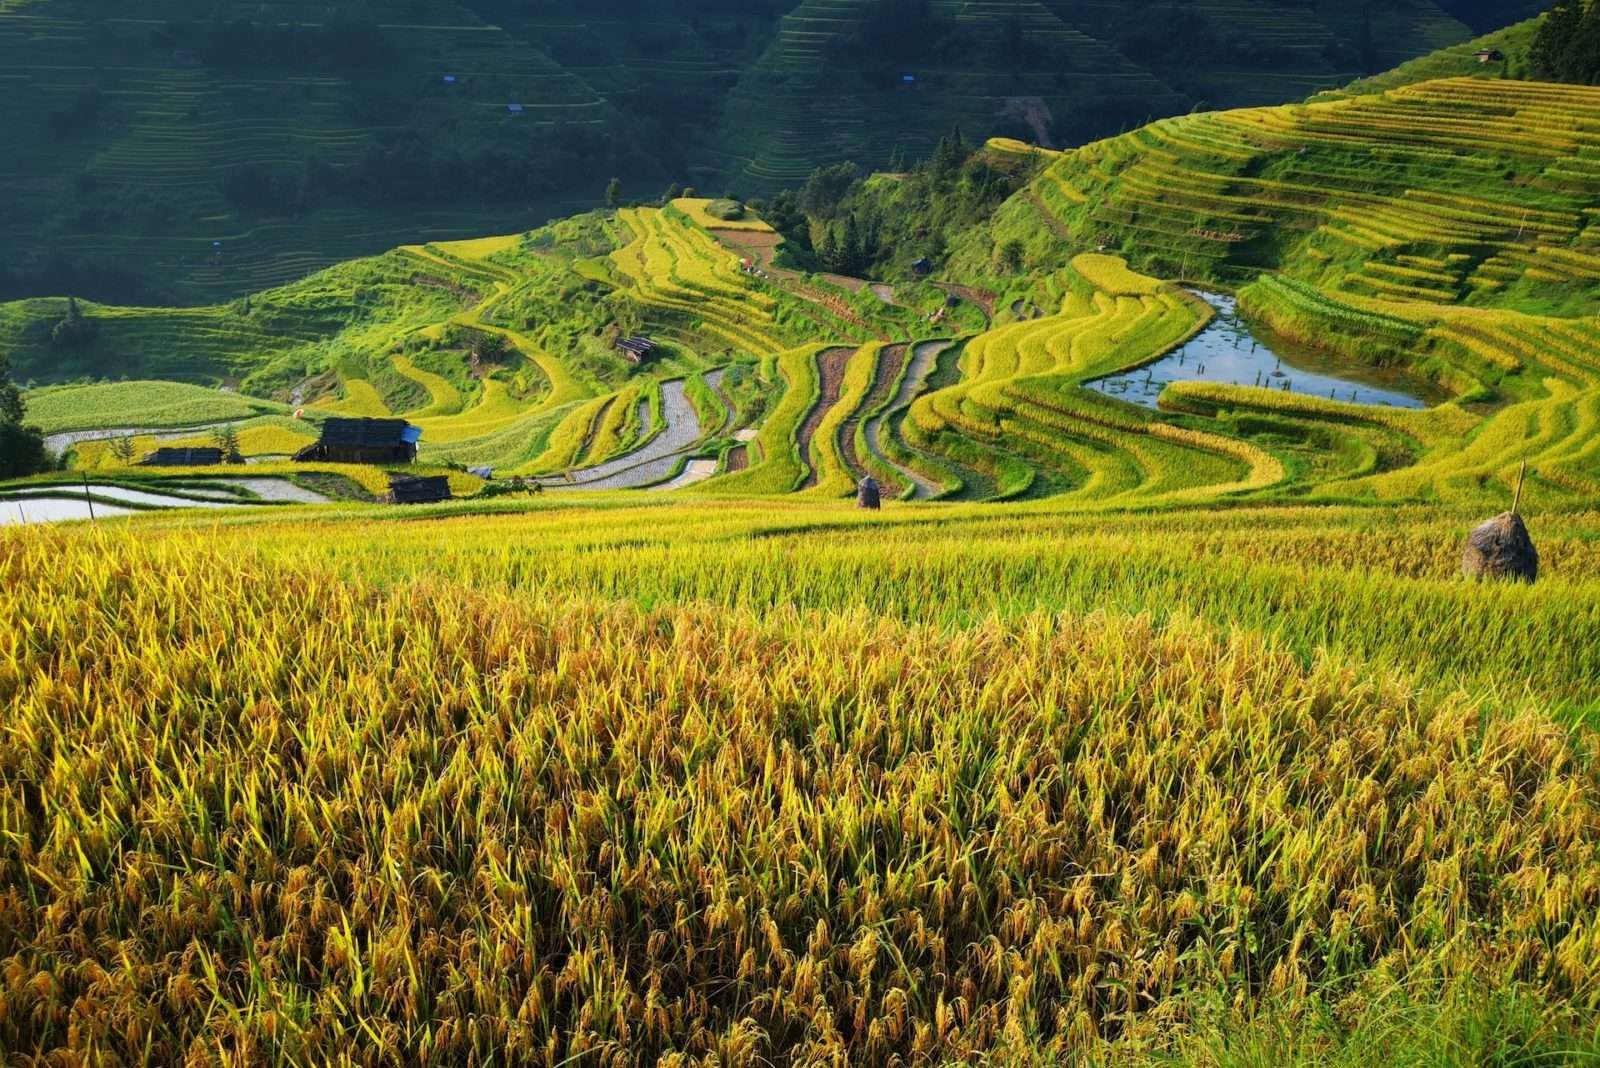 Guizhou Rice Terraces